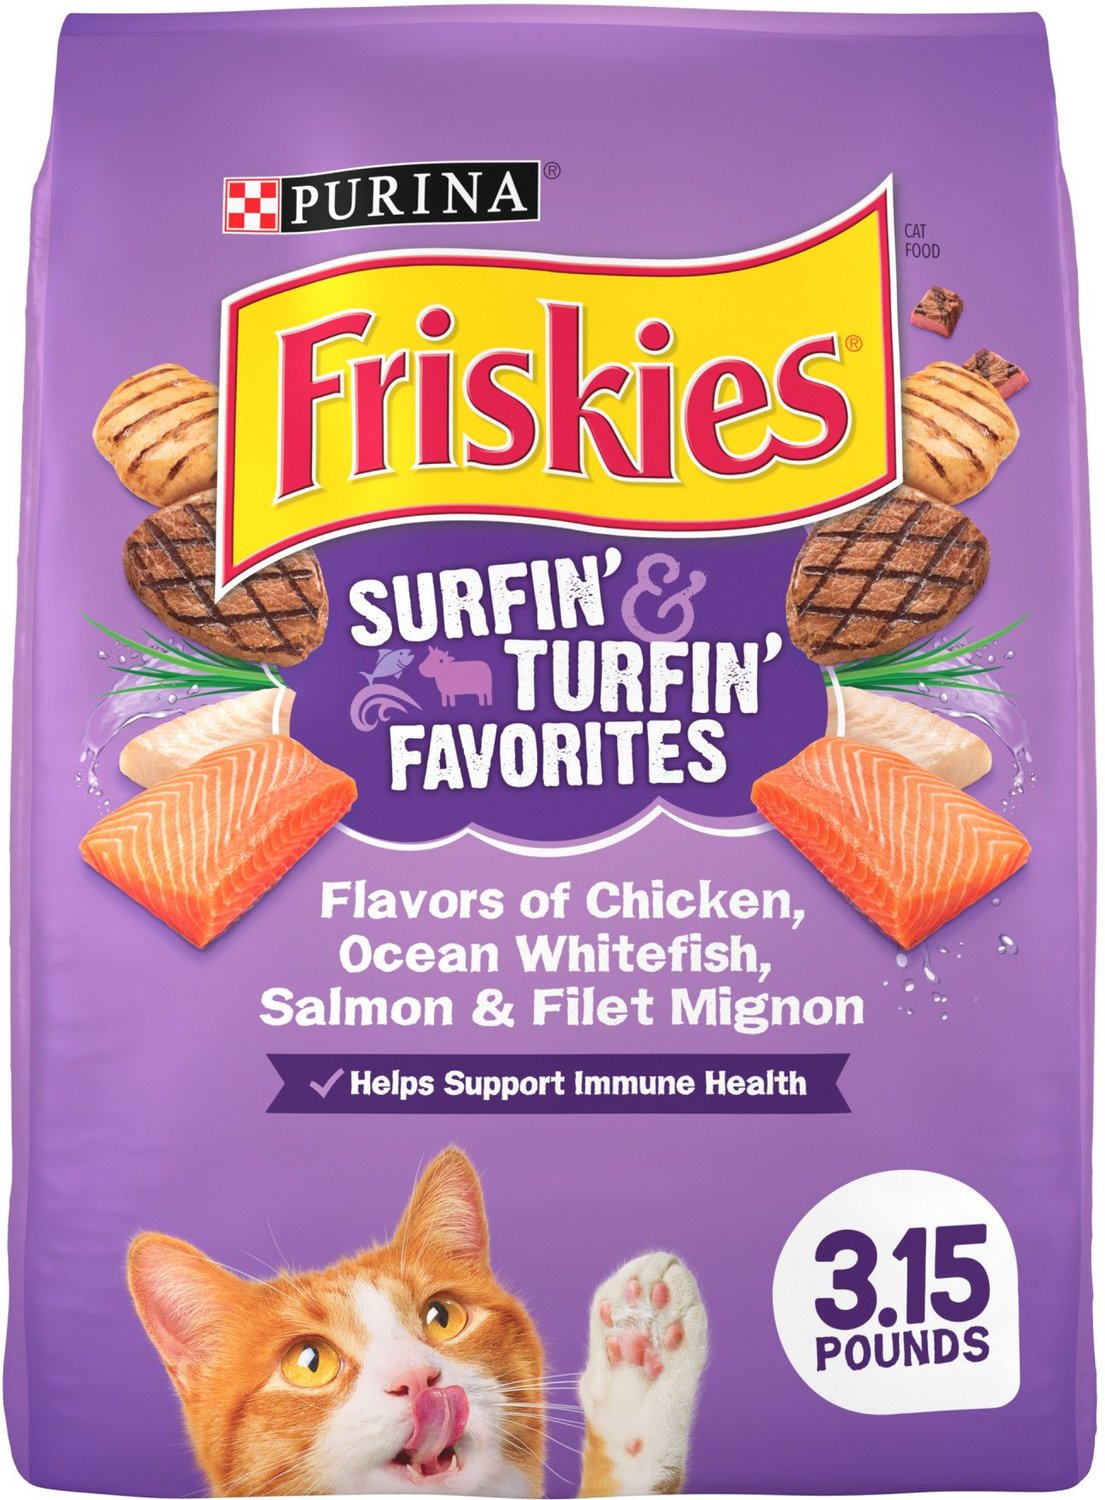 FRISKIES Surfin' & Turfin' Favorites Dry Cat Food, 3.15lb bag